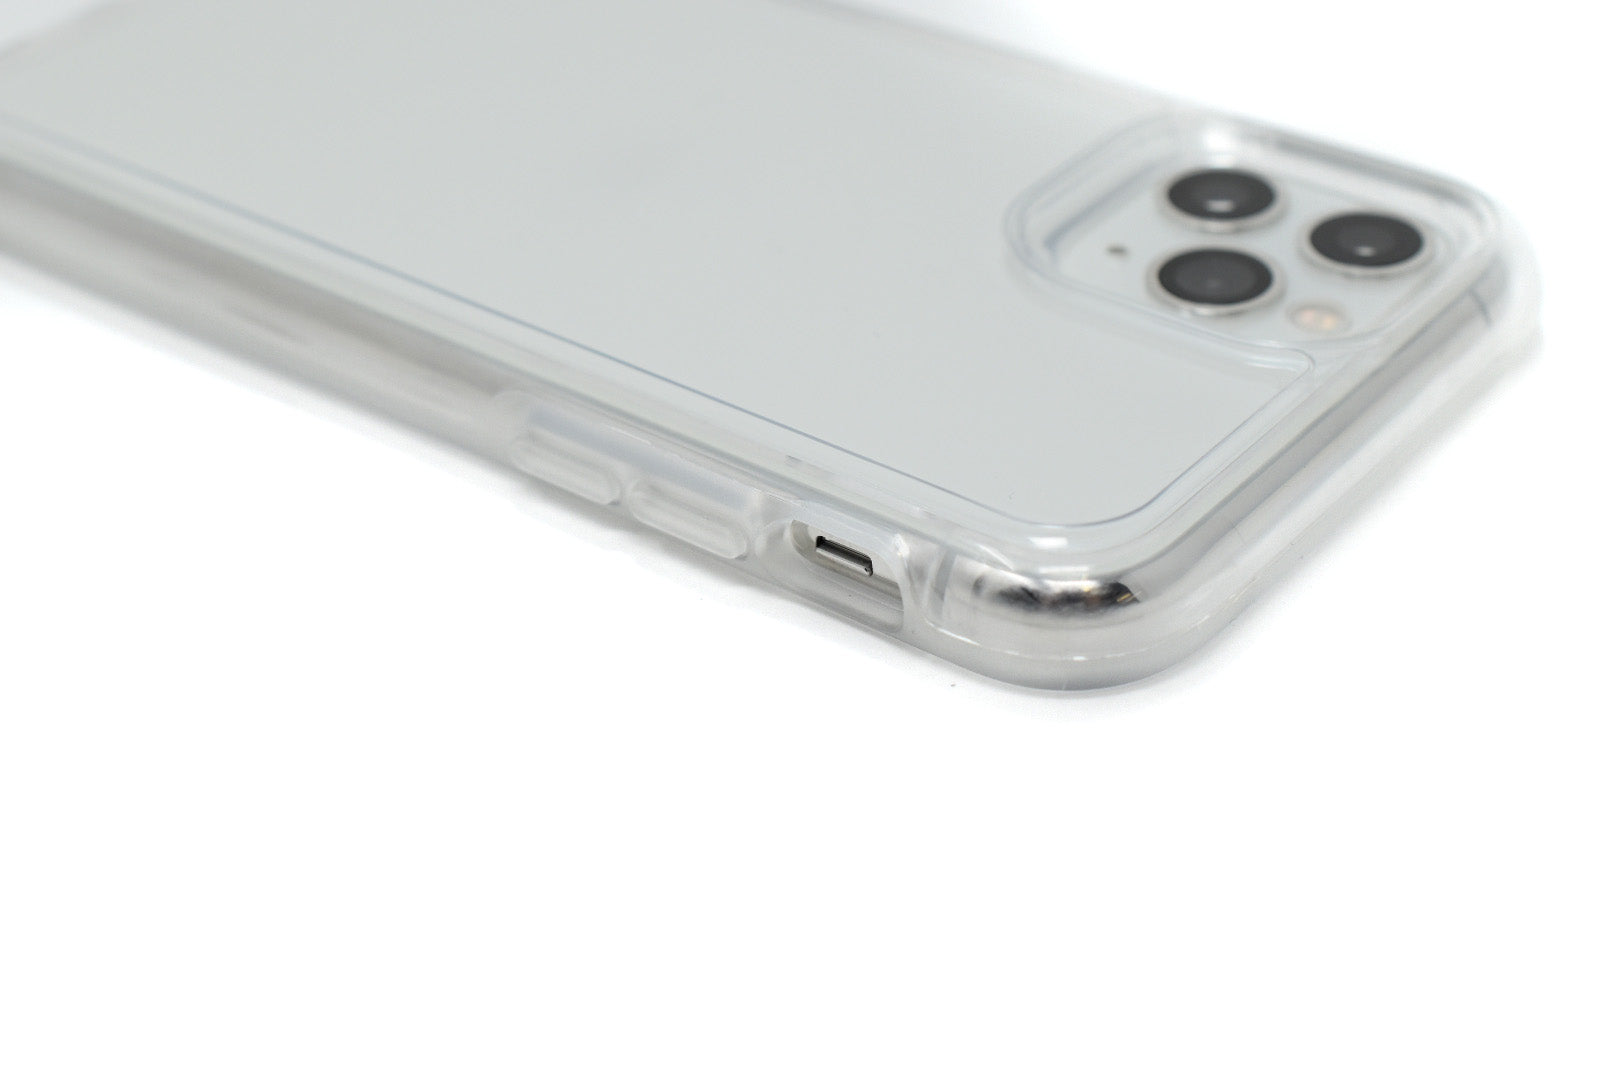 Funda Case De Uso Rudo Para iPhone Transparente Antigolpes IPhone 11 Pro